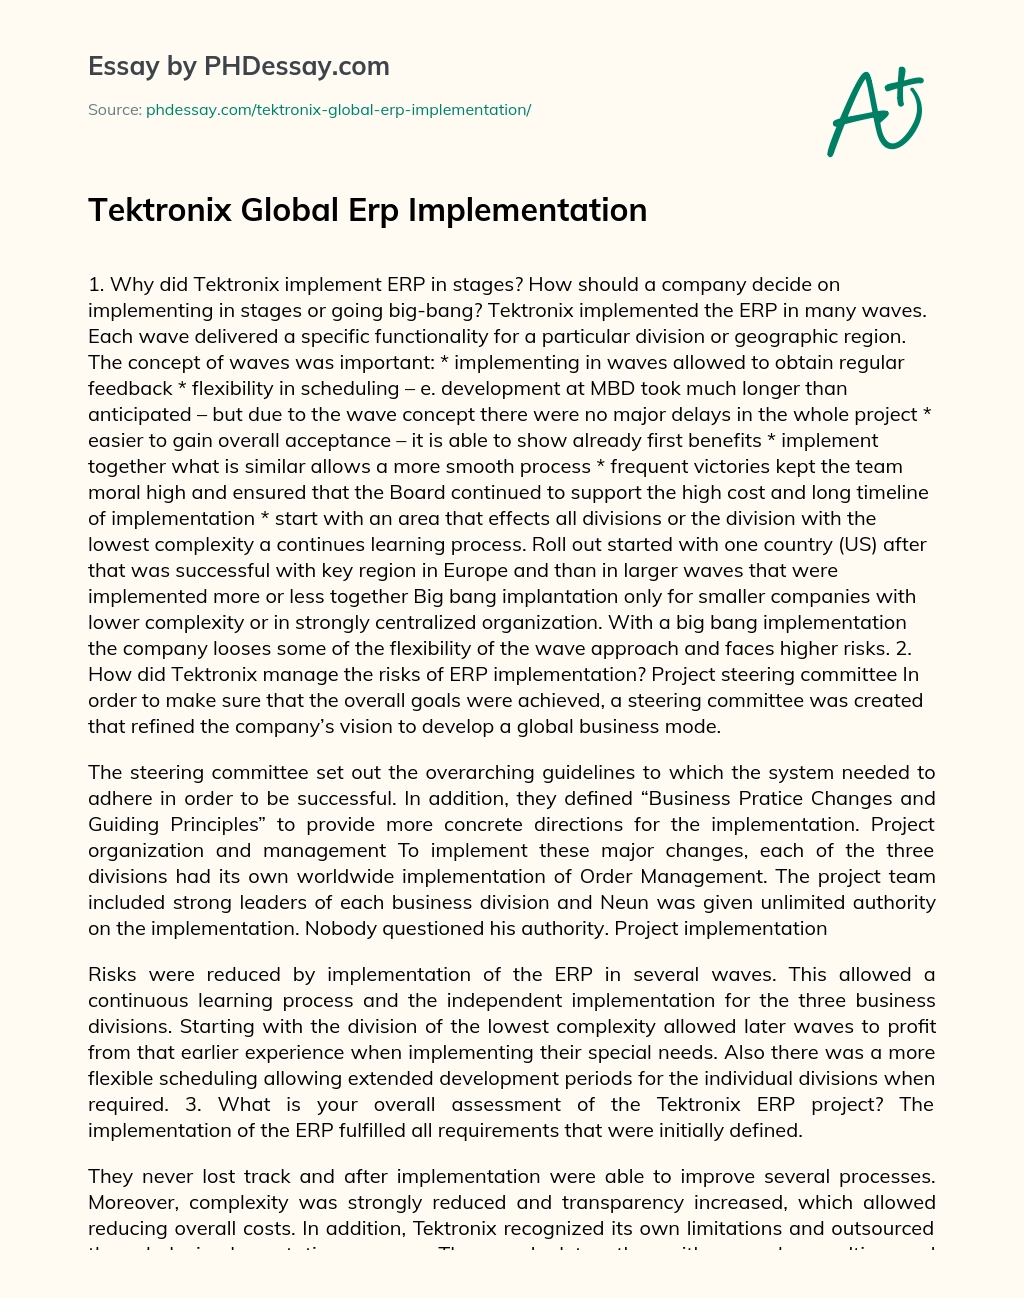 Tektronix Global Erp Implementation essay